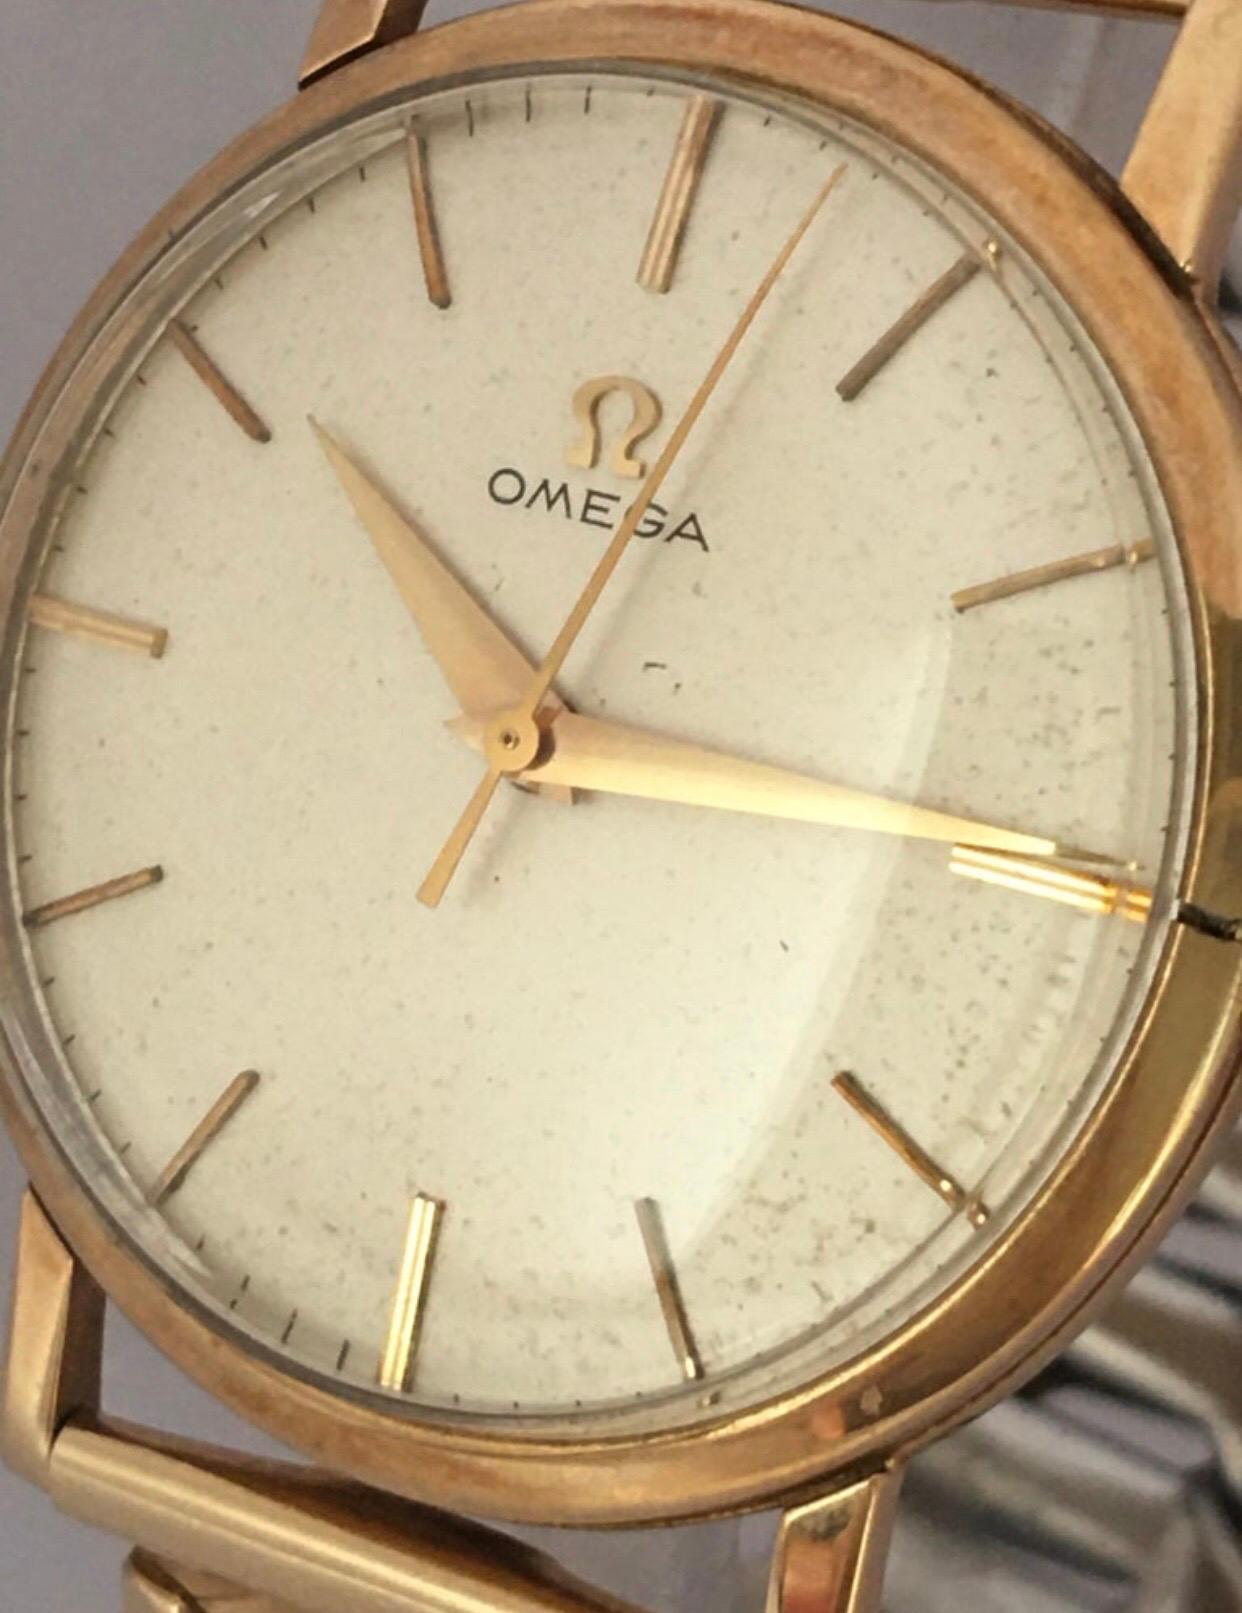 9 Karat Gold and Rolled Gold Bracelet 1960s Omega Mechanical Watch For Sale 7